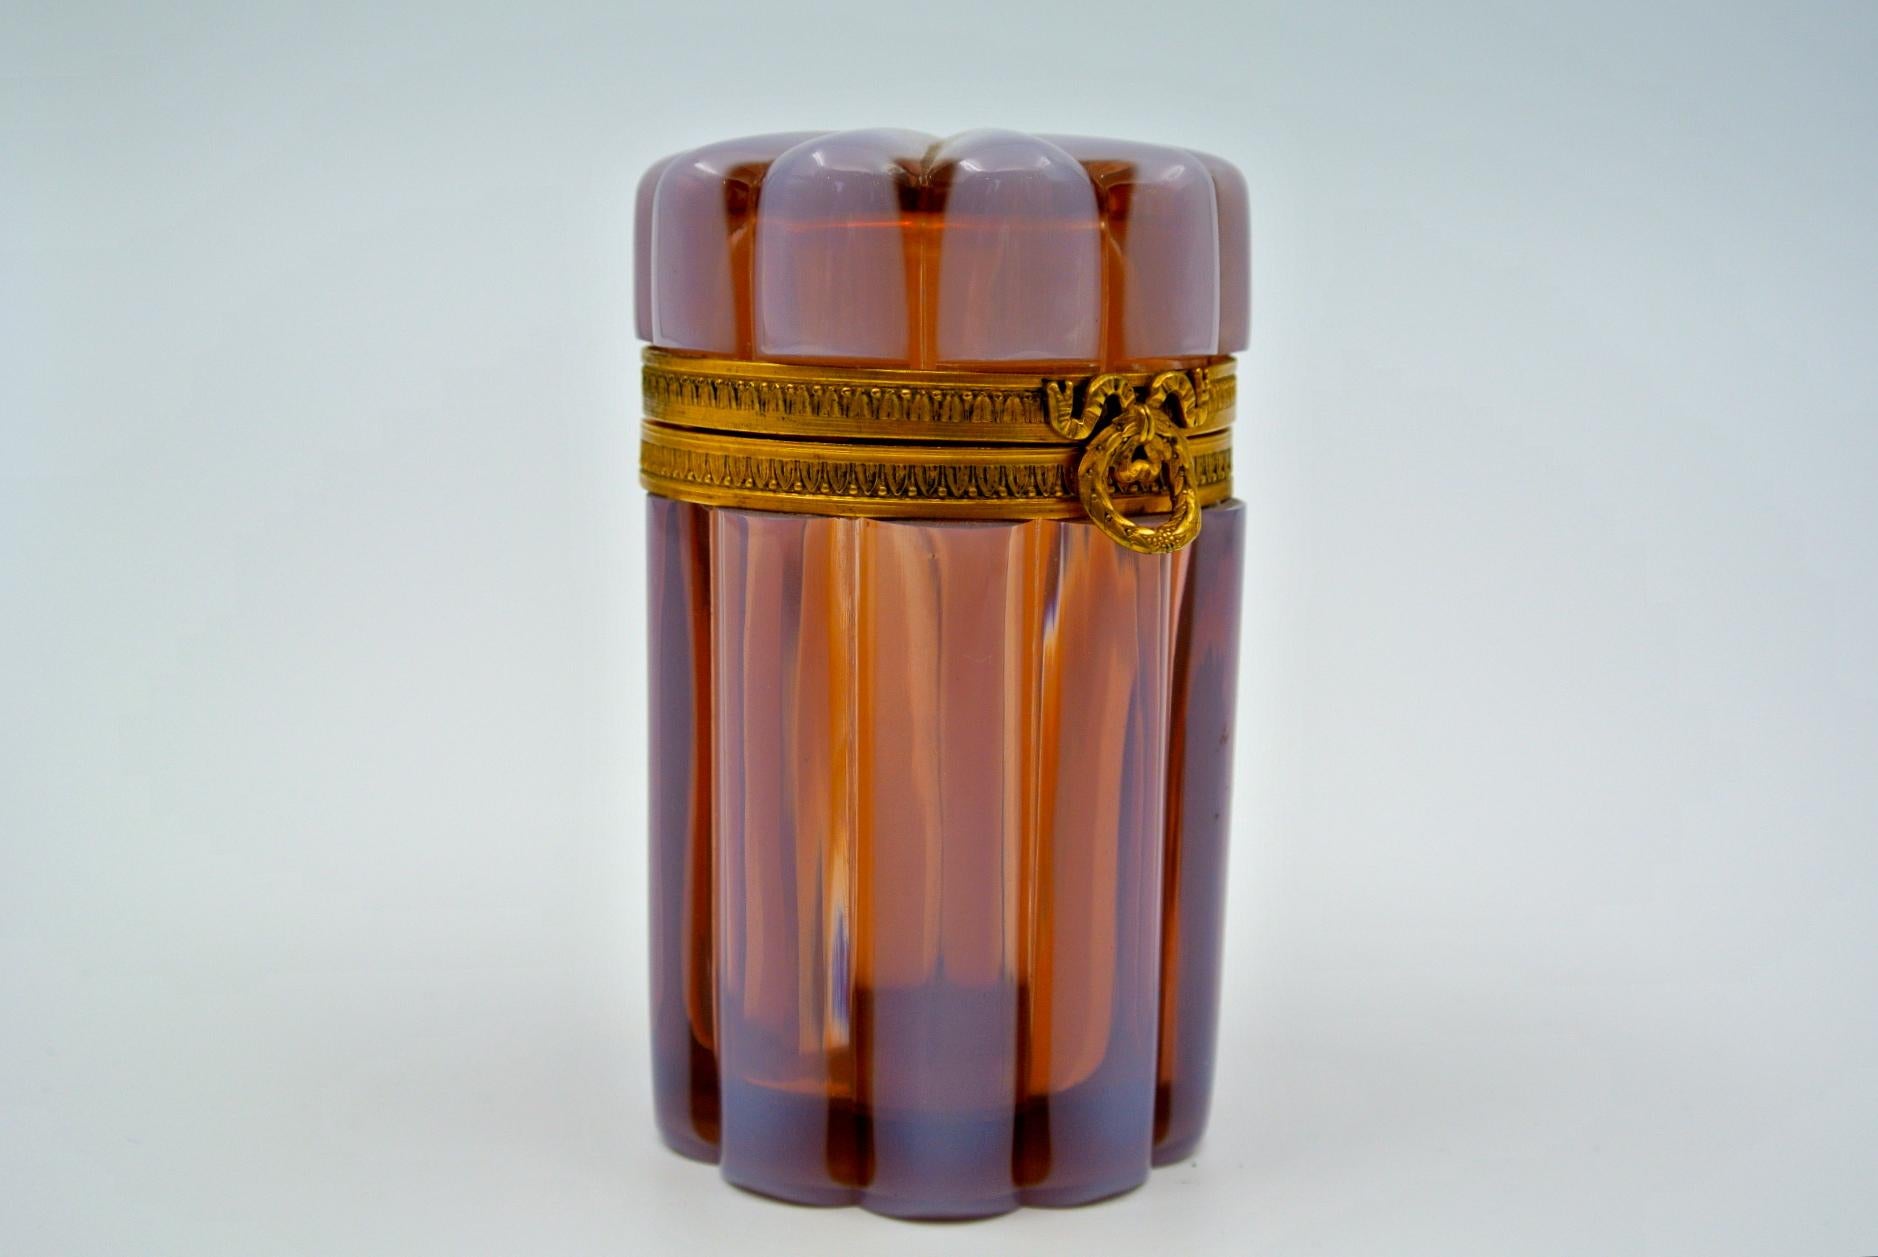 Opaline box, gilded brass frame, 19th century, Napoleon III period
Measures: H 11cm, D 7cm.